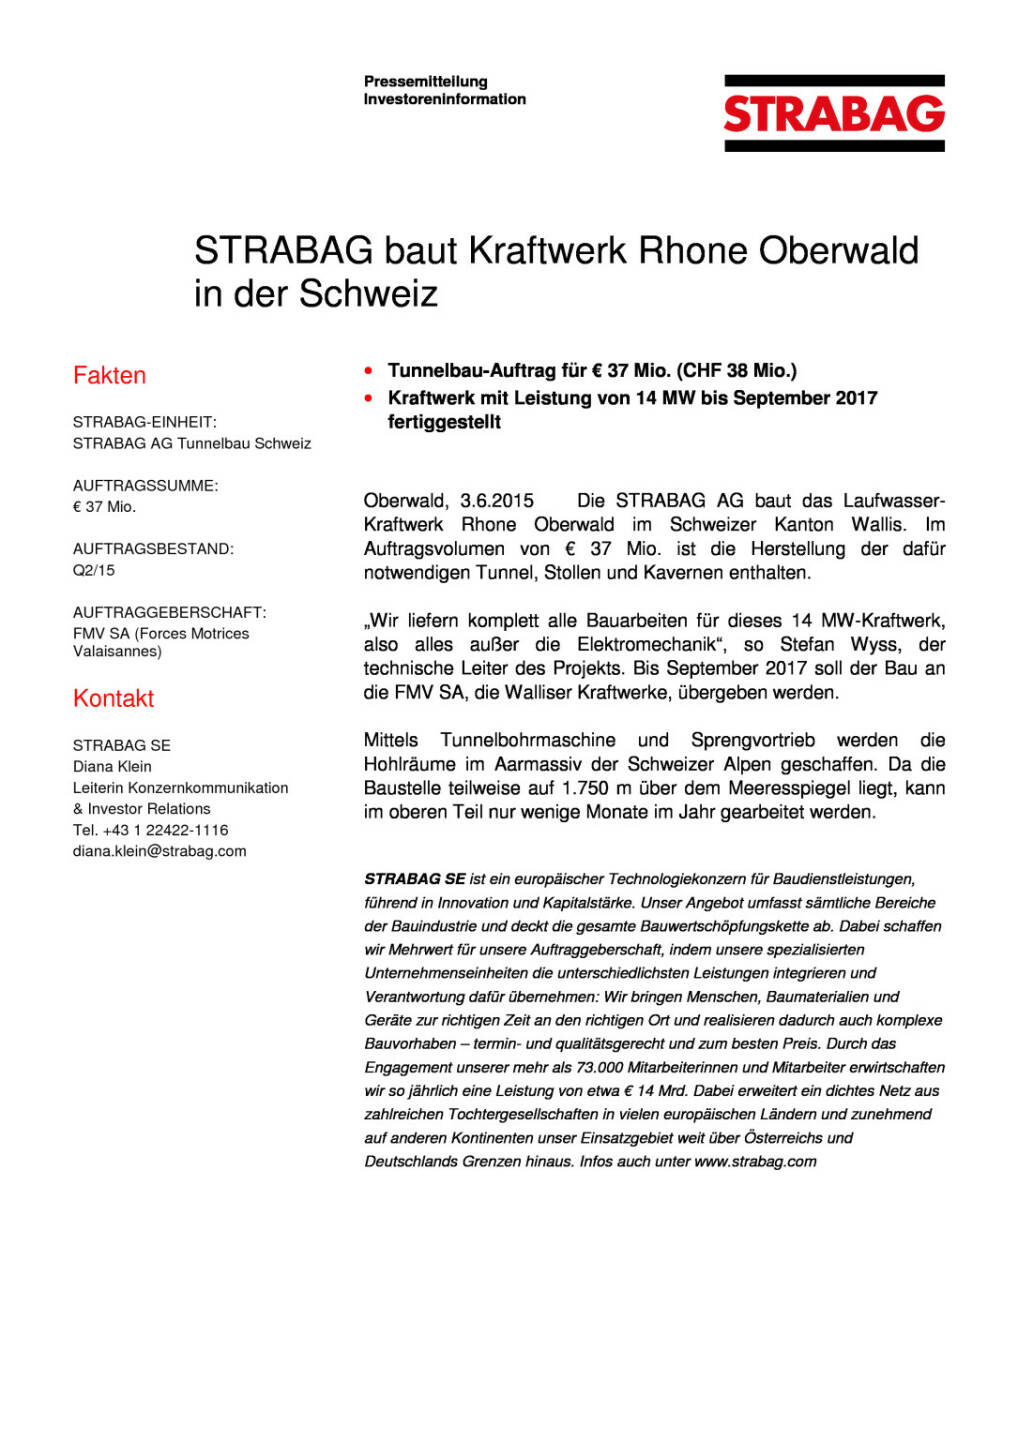 Strabag baut Kraftwerk Rhone Oberwald in der Schweiz, Seite 1/1, komplettes Dokument unter http://boerse-social.com/static/uploads/file_75_strabag_kraftwerk.pdf